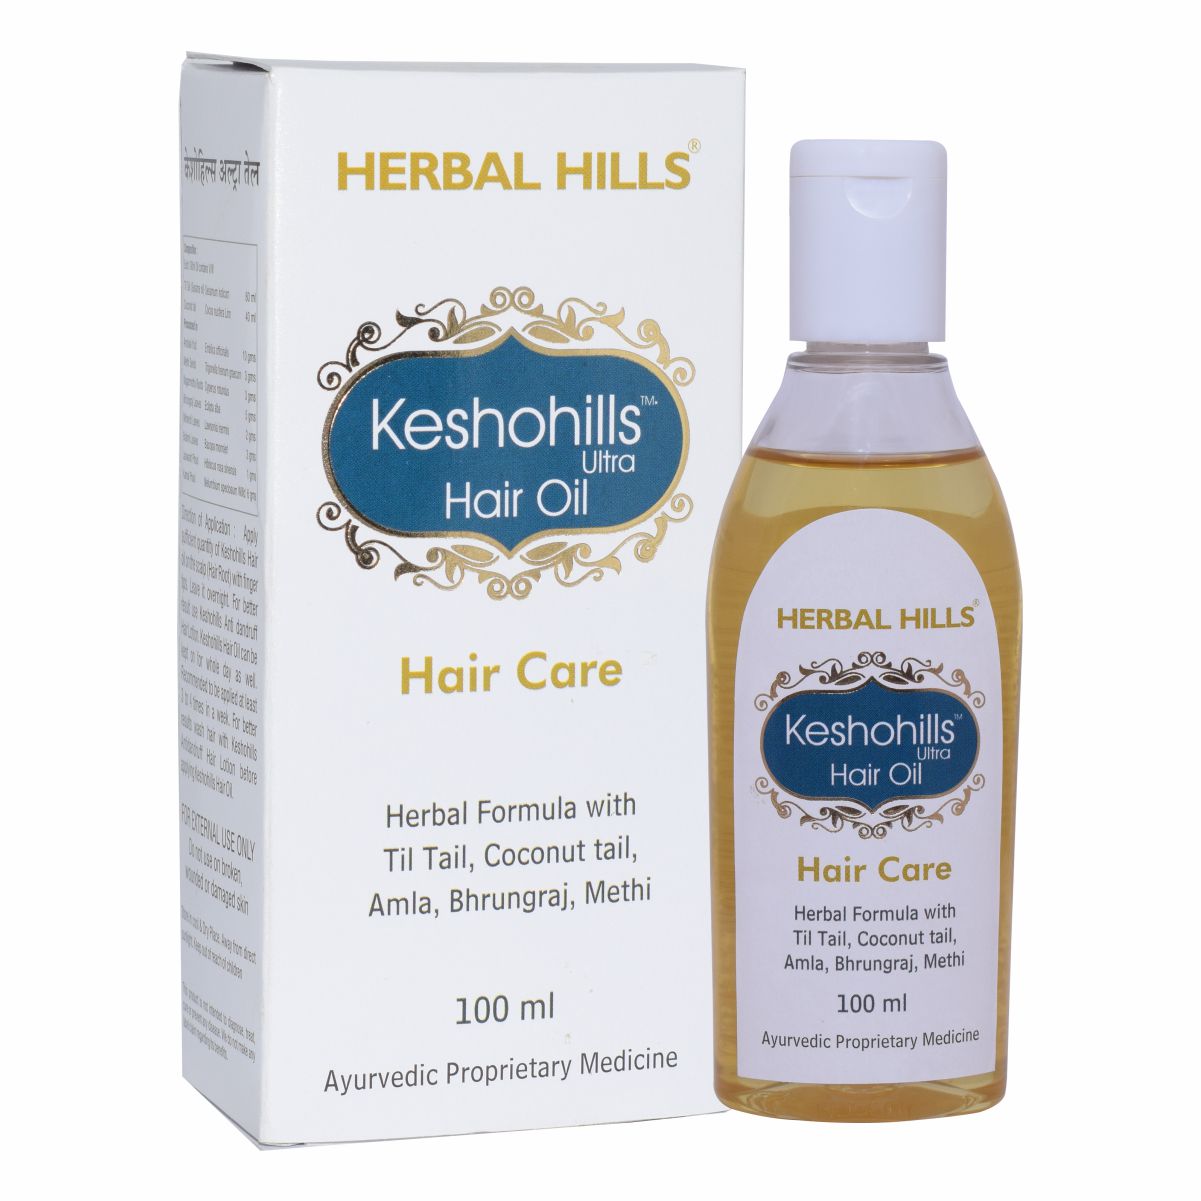 Herbal Hills Keshohills Hair Oil